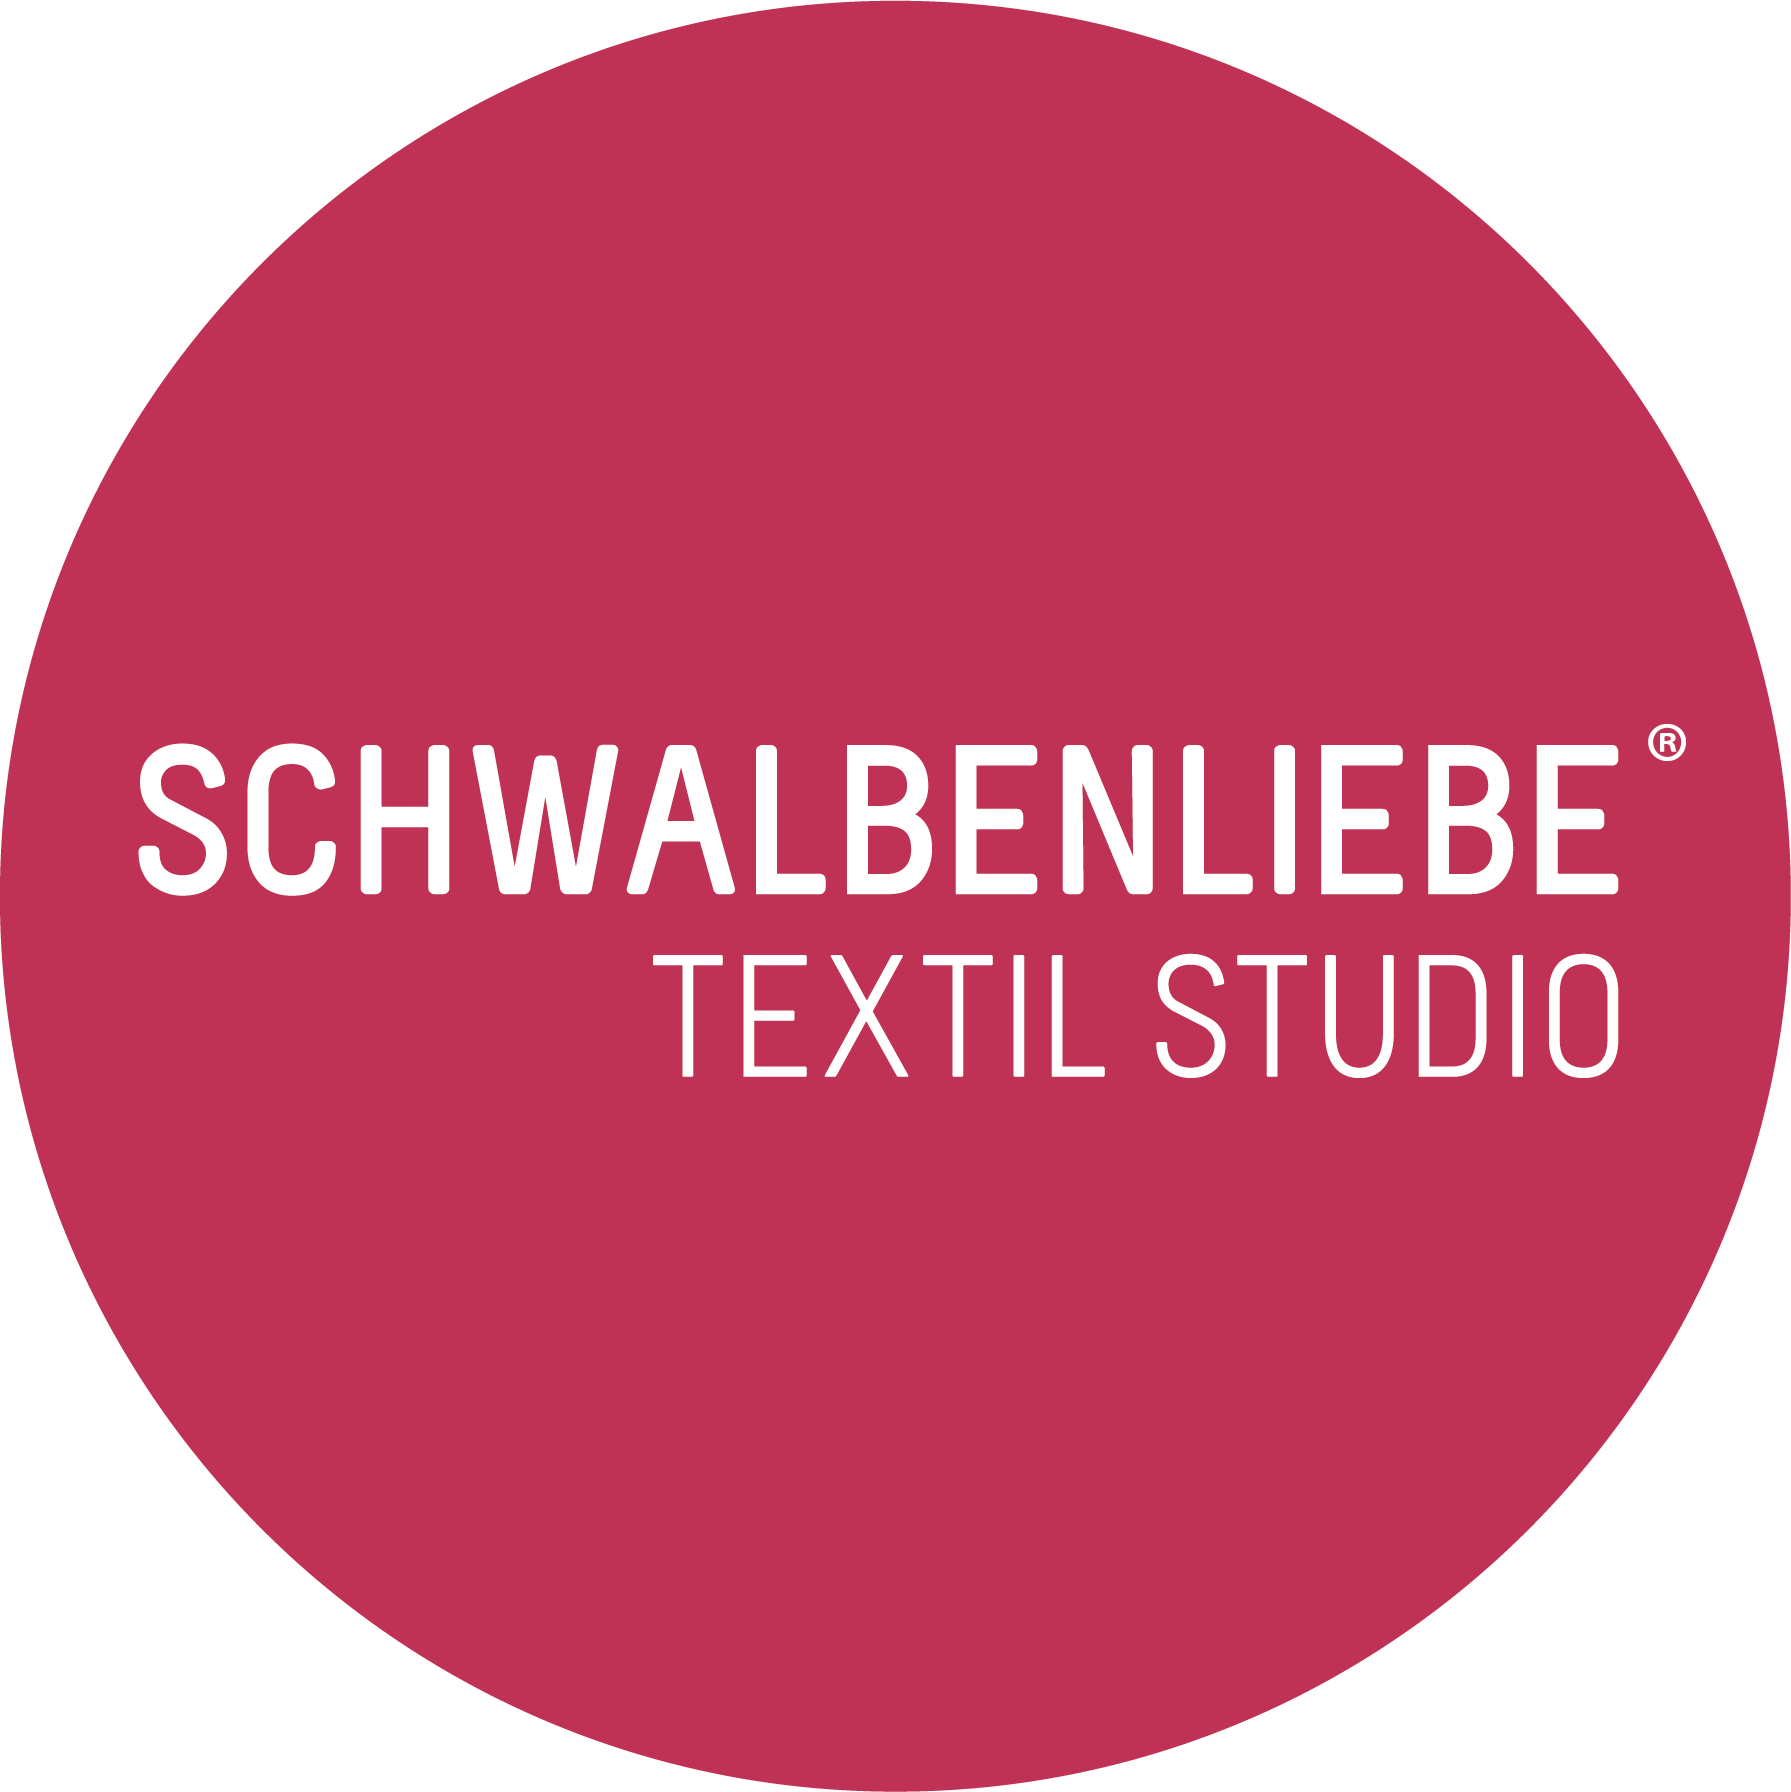 (c) Schwalbenliebe.com